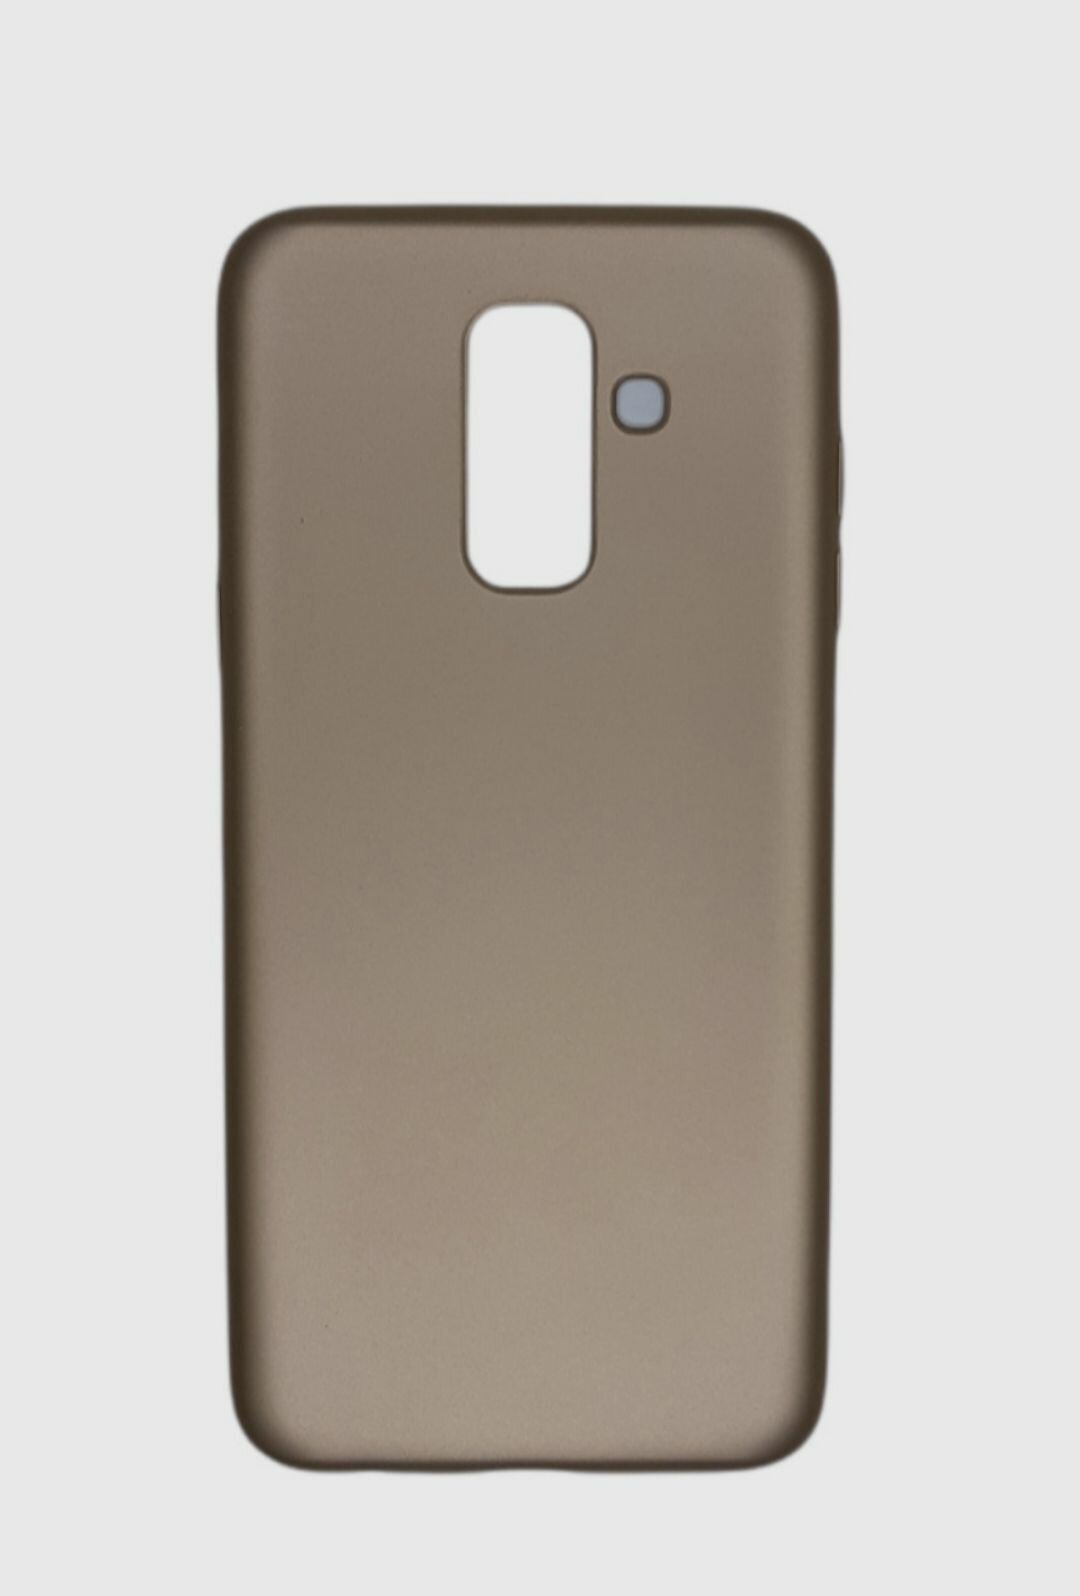 Samsung Galaxy A6+ Plus / J8 2018 тёмно-прозрачный чехол накладка бампер самсунг галакси а6 +, ж8